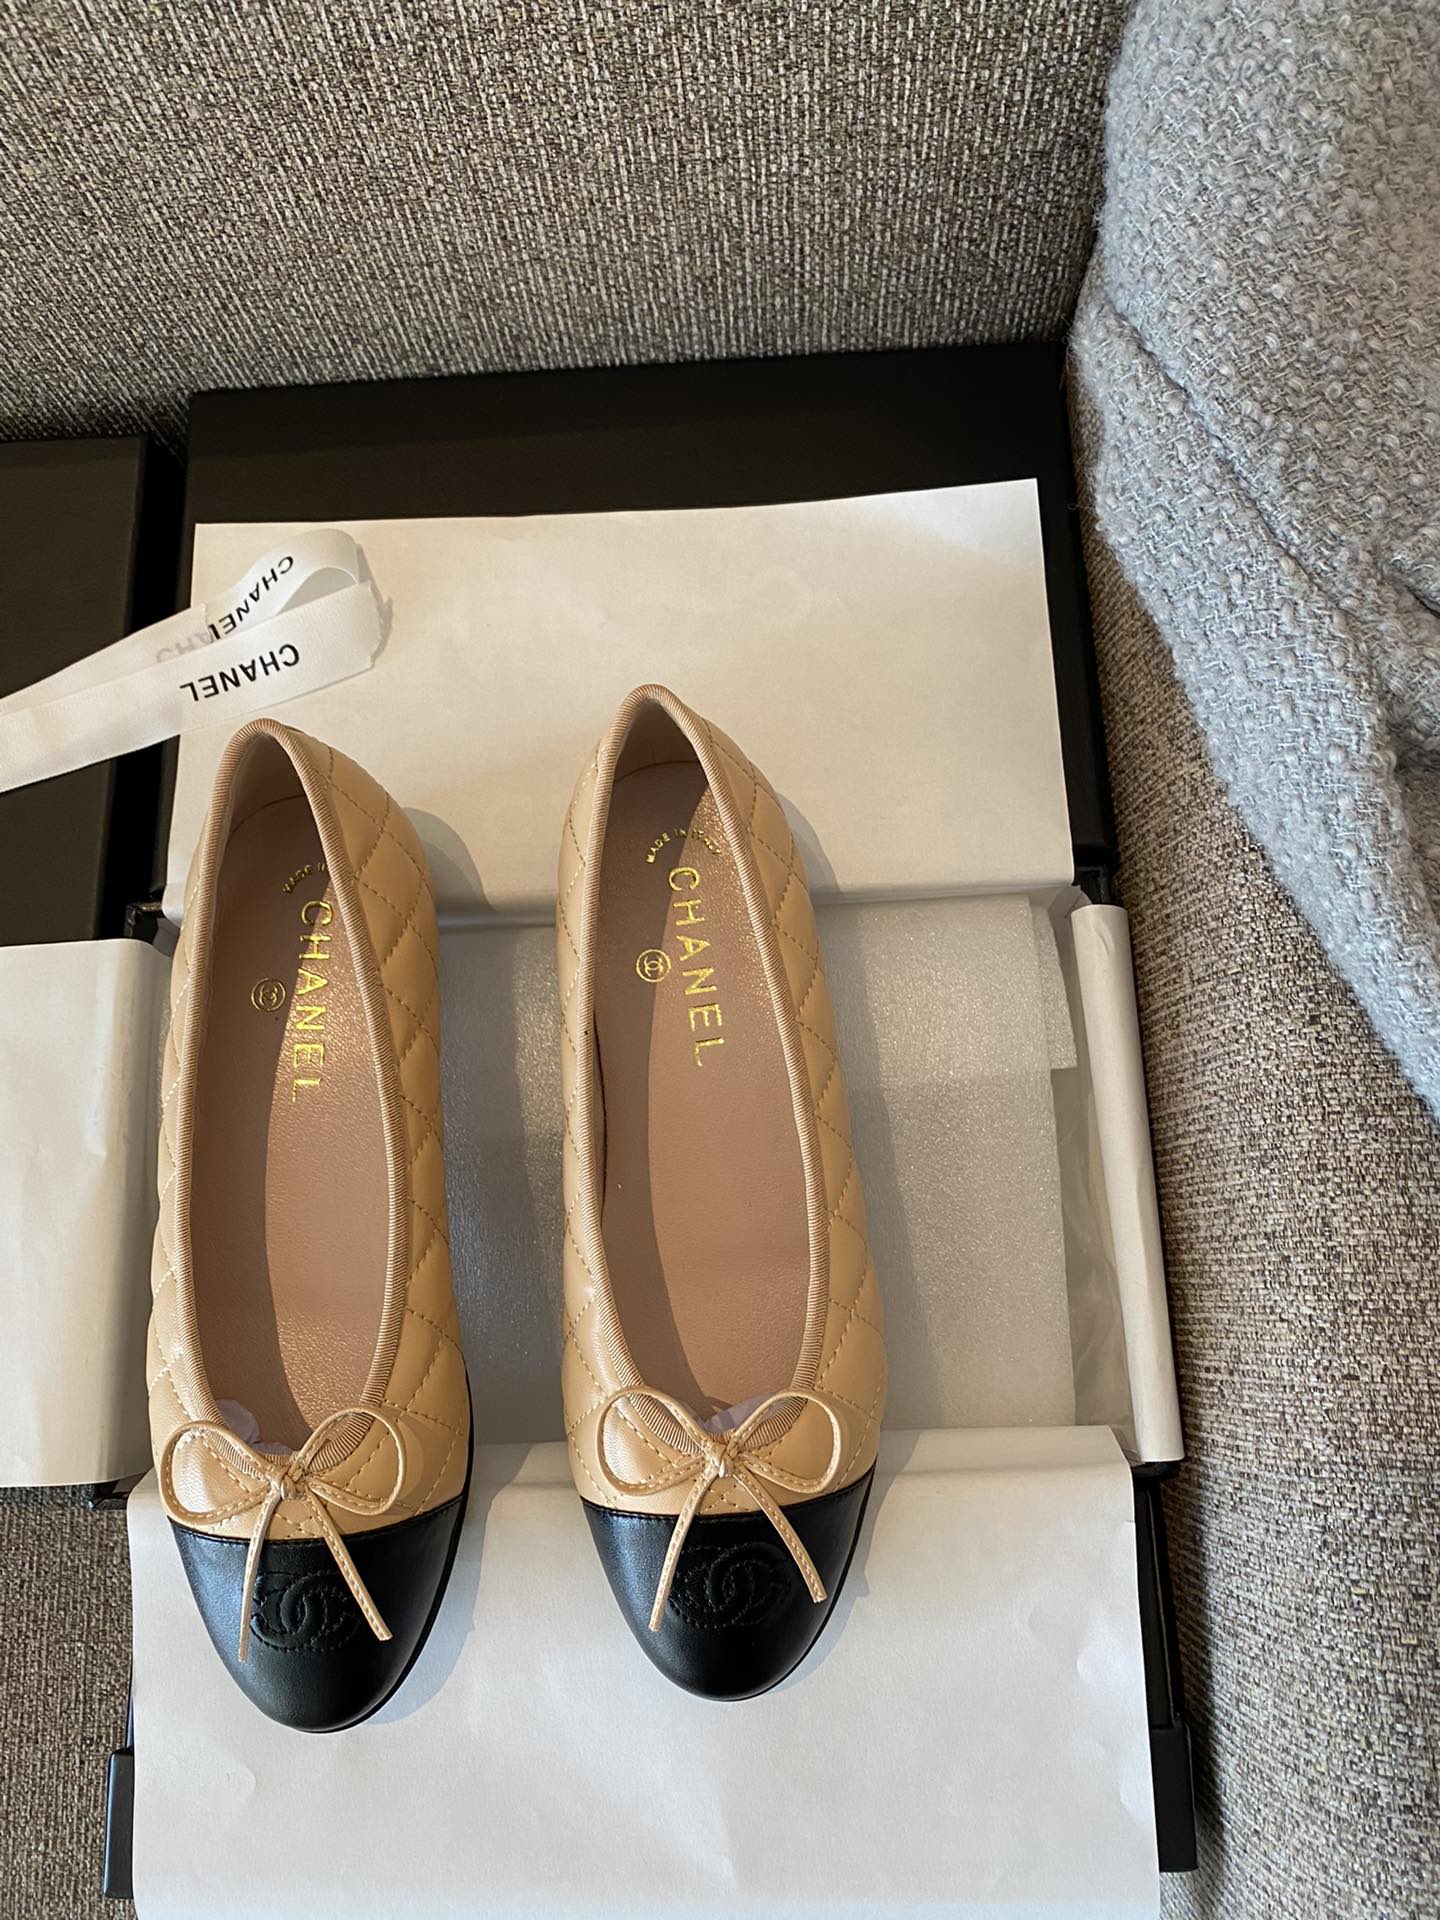 A,Chanel flat Ballet shoes